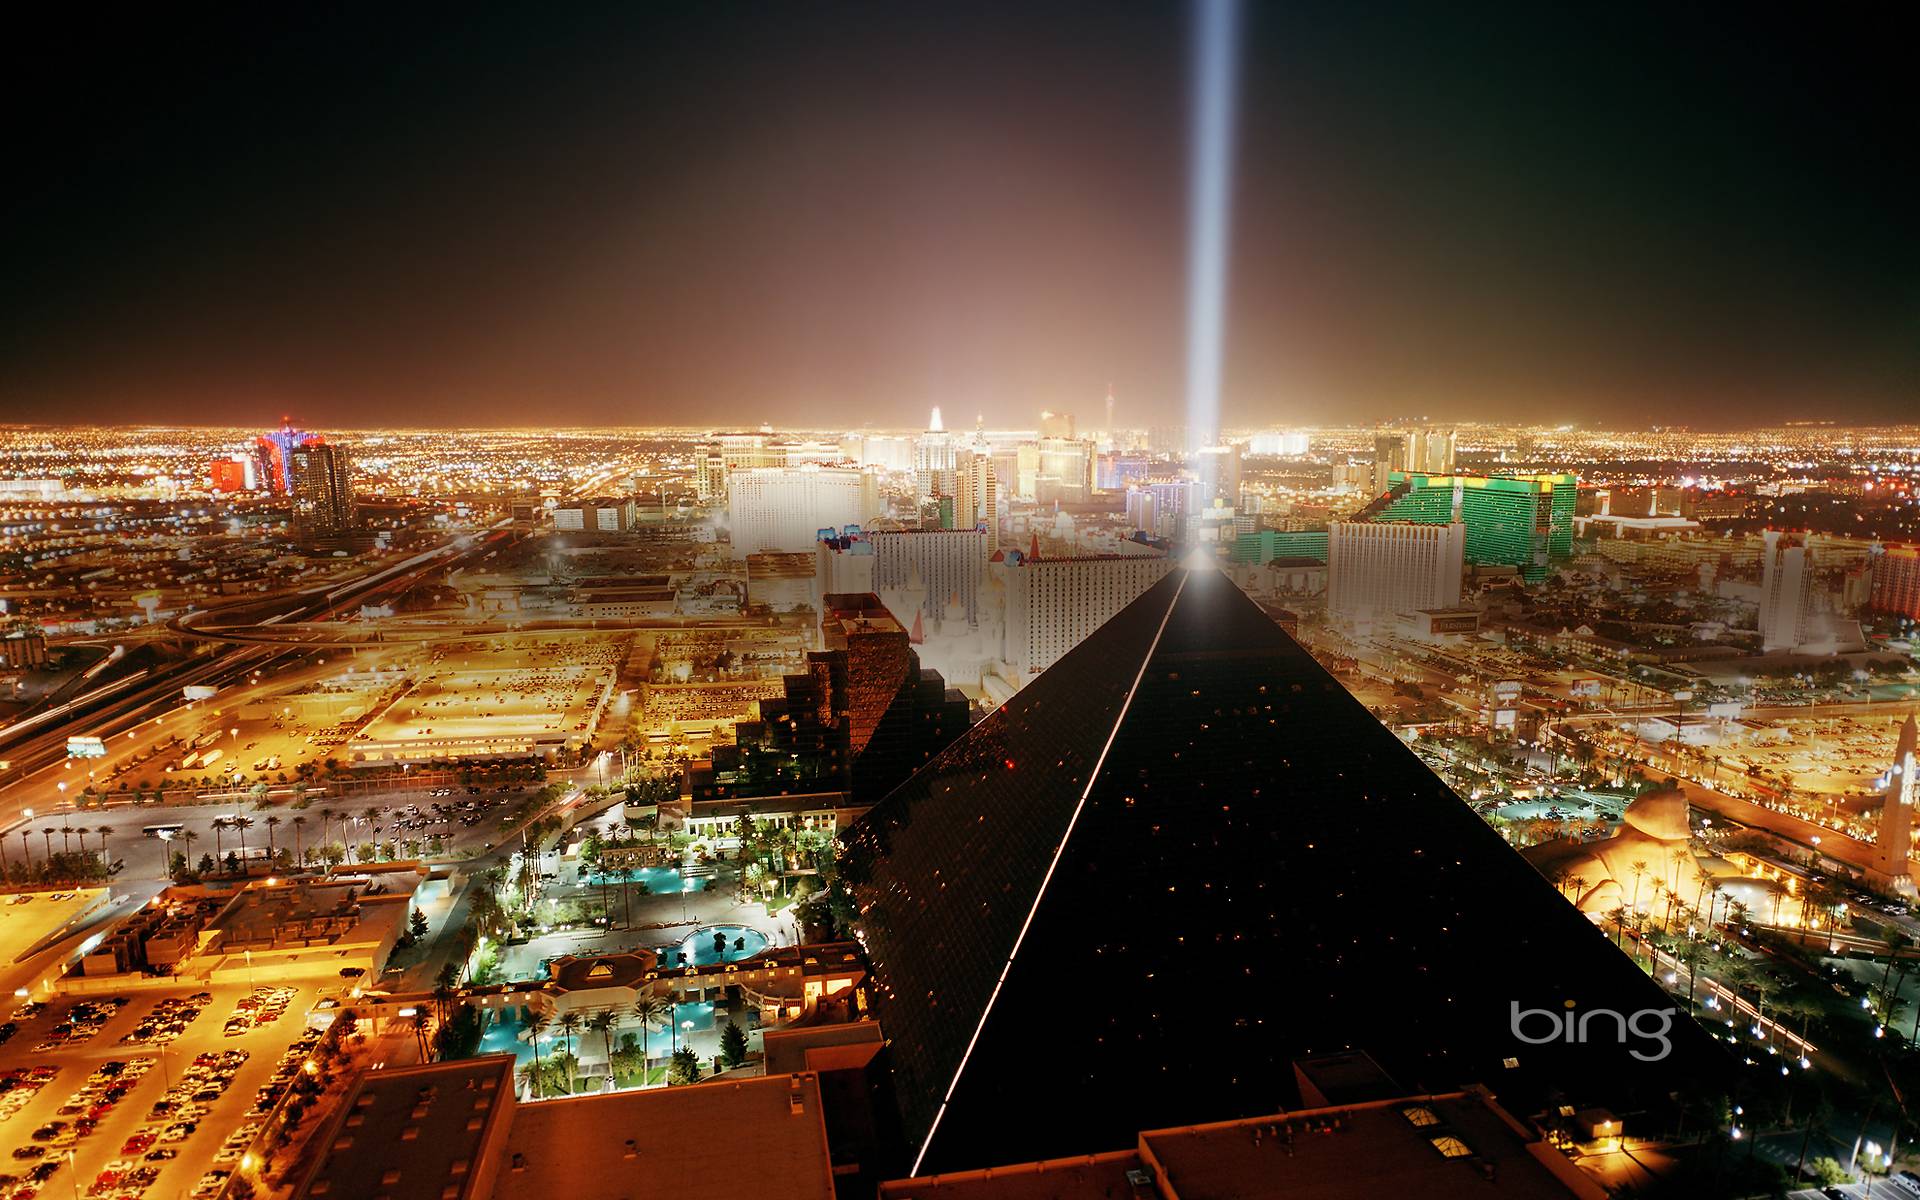 Bing Wallpapers Download - Las Vegas Pyramid At Night - HD Wallpaper 